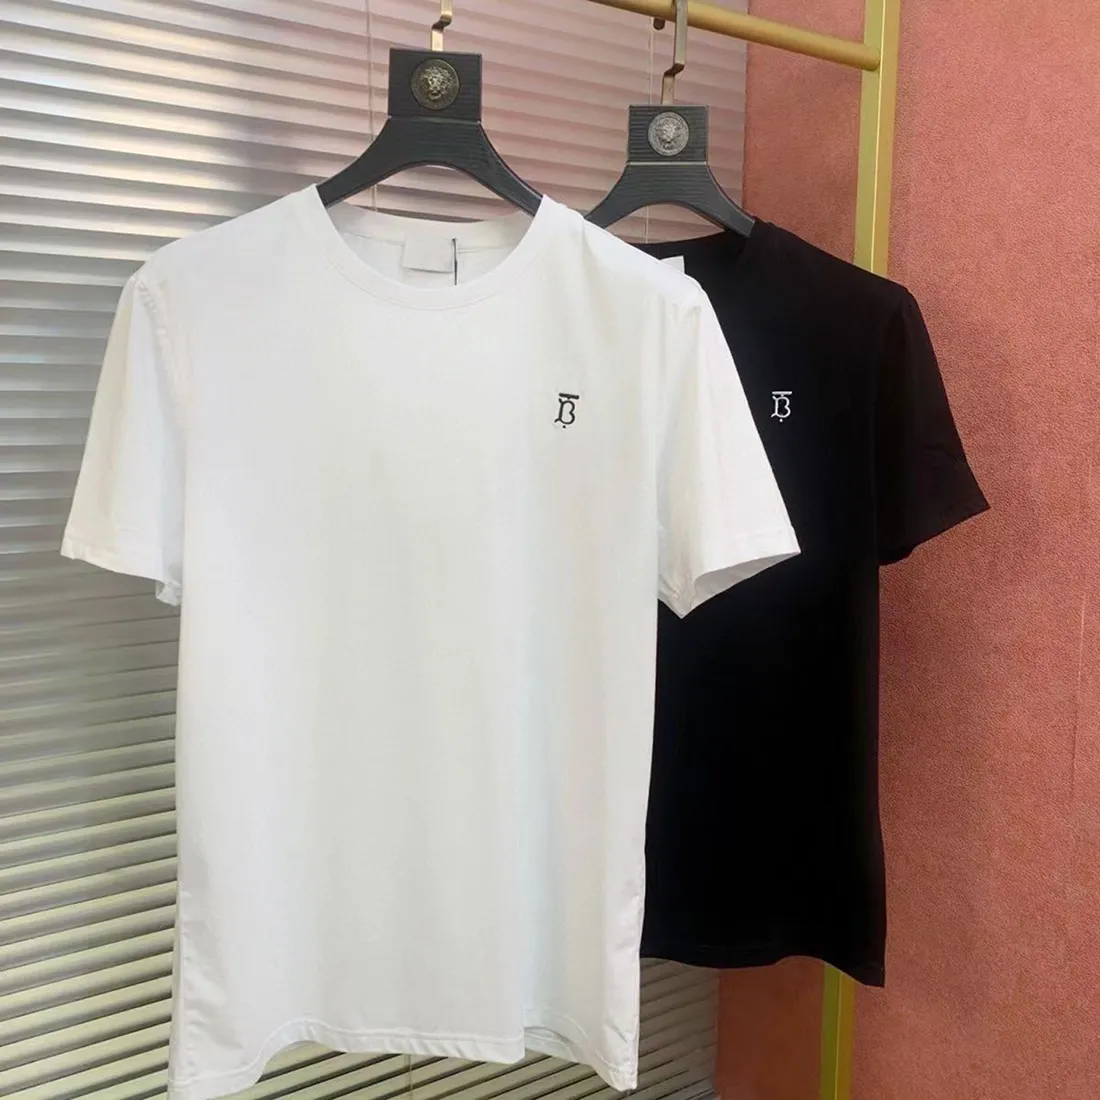 Fashion T Shirts Designer Man Tshirts Borderys Letras Shorts Tees impressos de verão Tops Breathable Camisa clássica de design de pano m-4xl